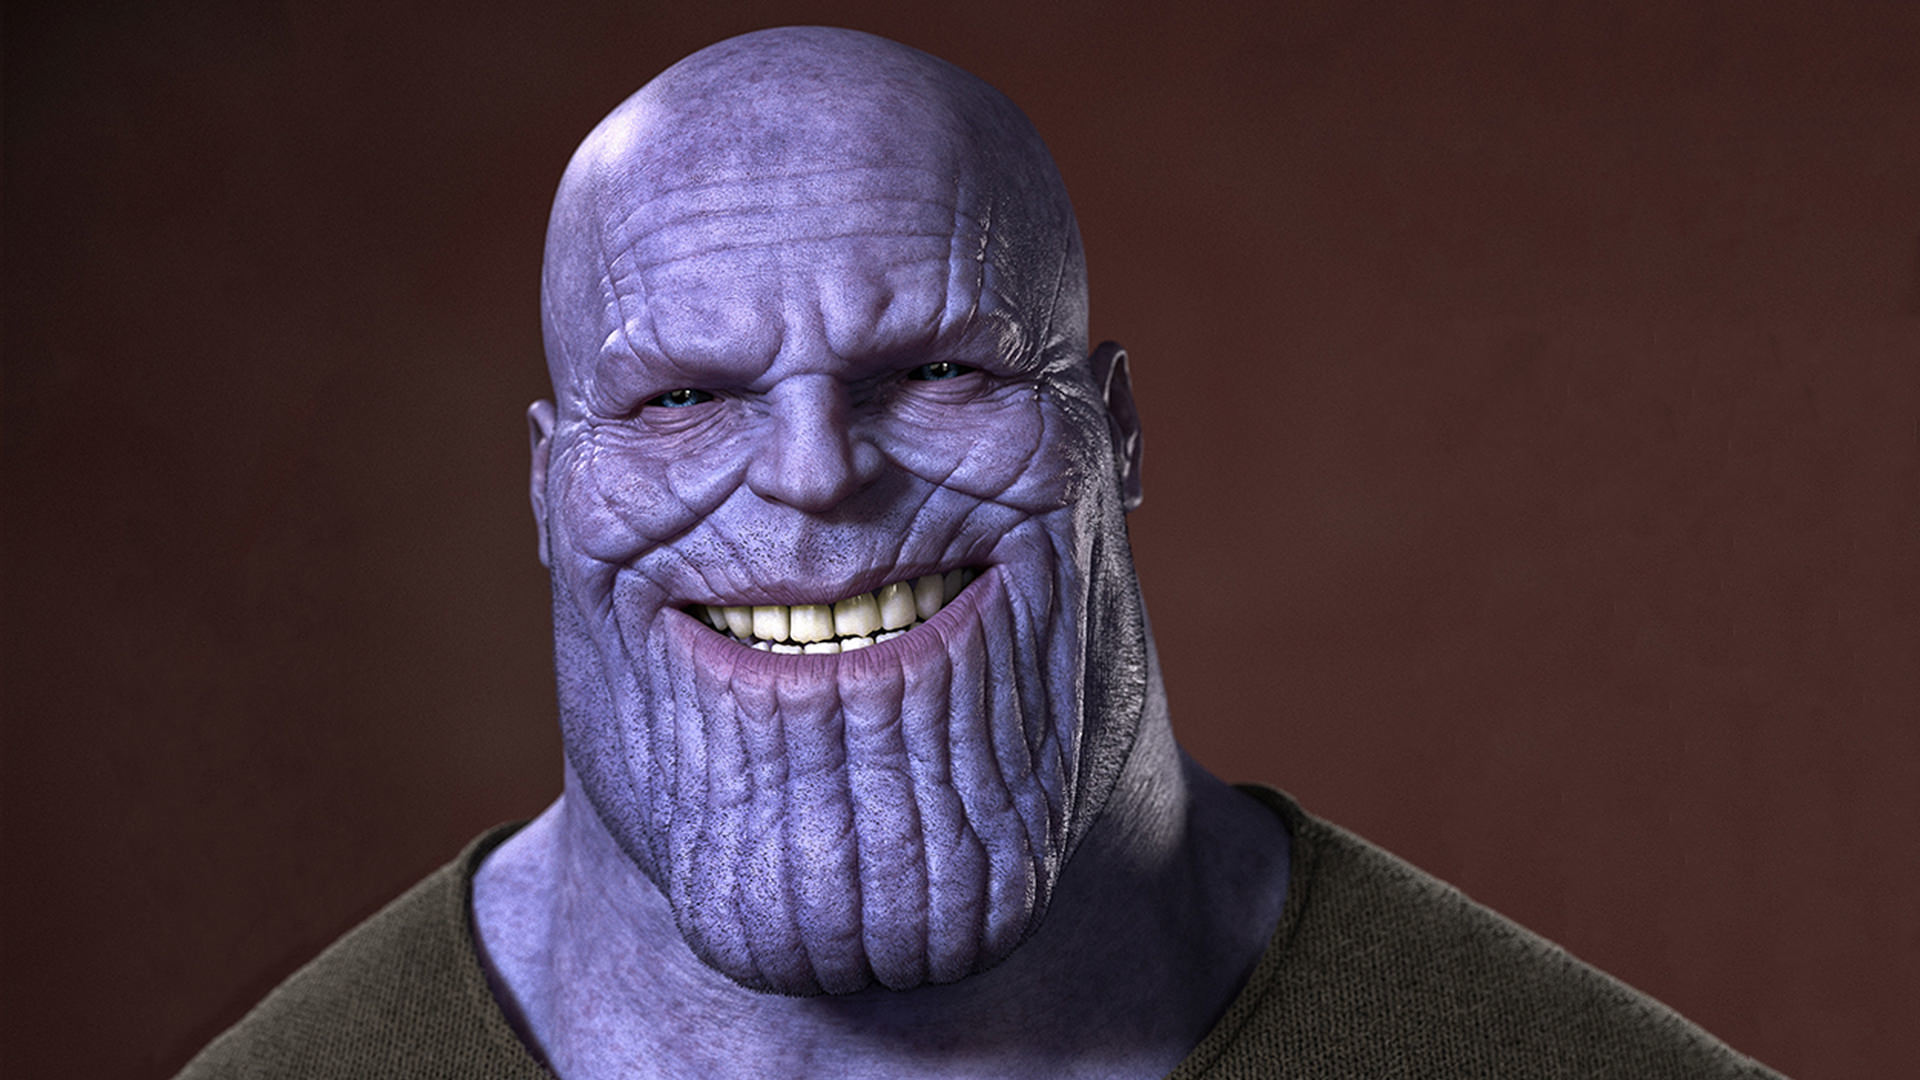 Thanos Smiling Wallpaper HD Movies 4k Image Photos